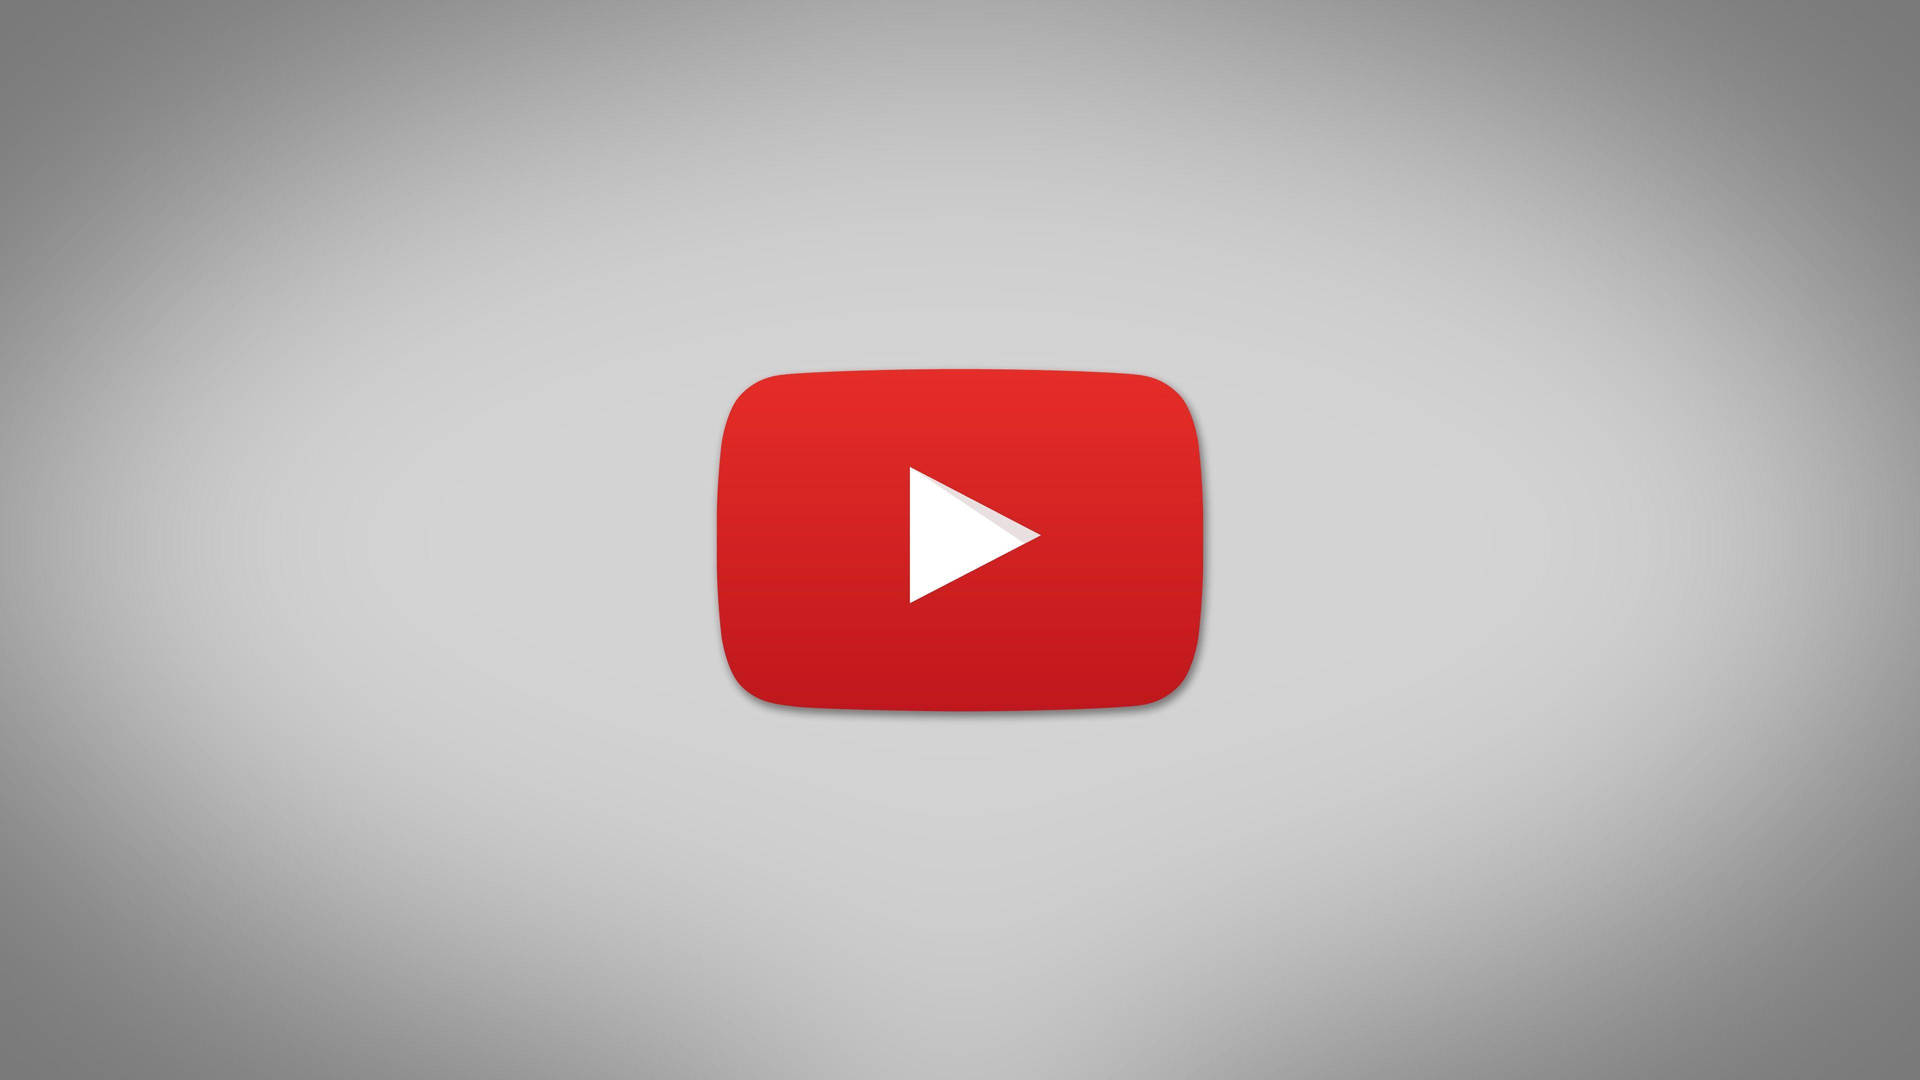 Aesthetic Youtube Minimalist Red Button Logo Background